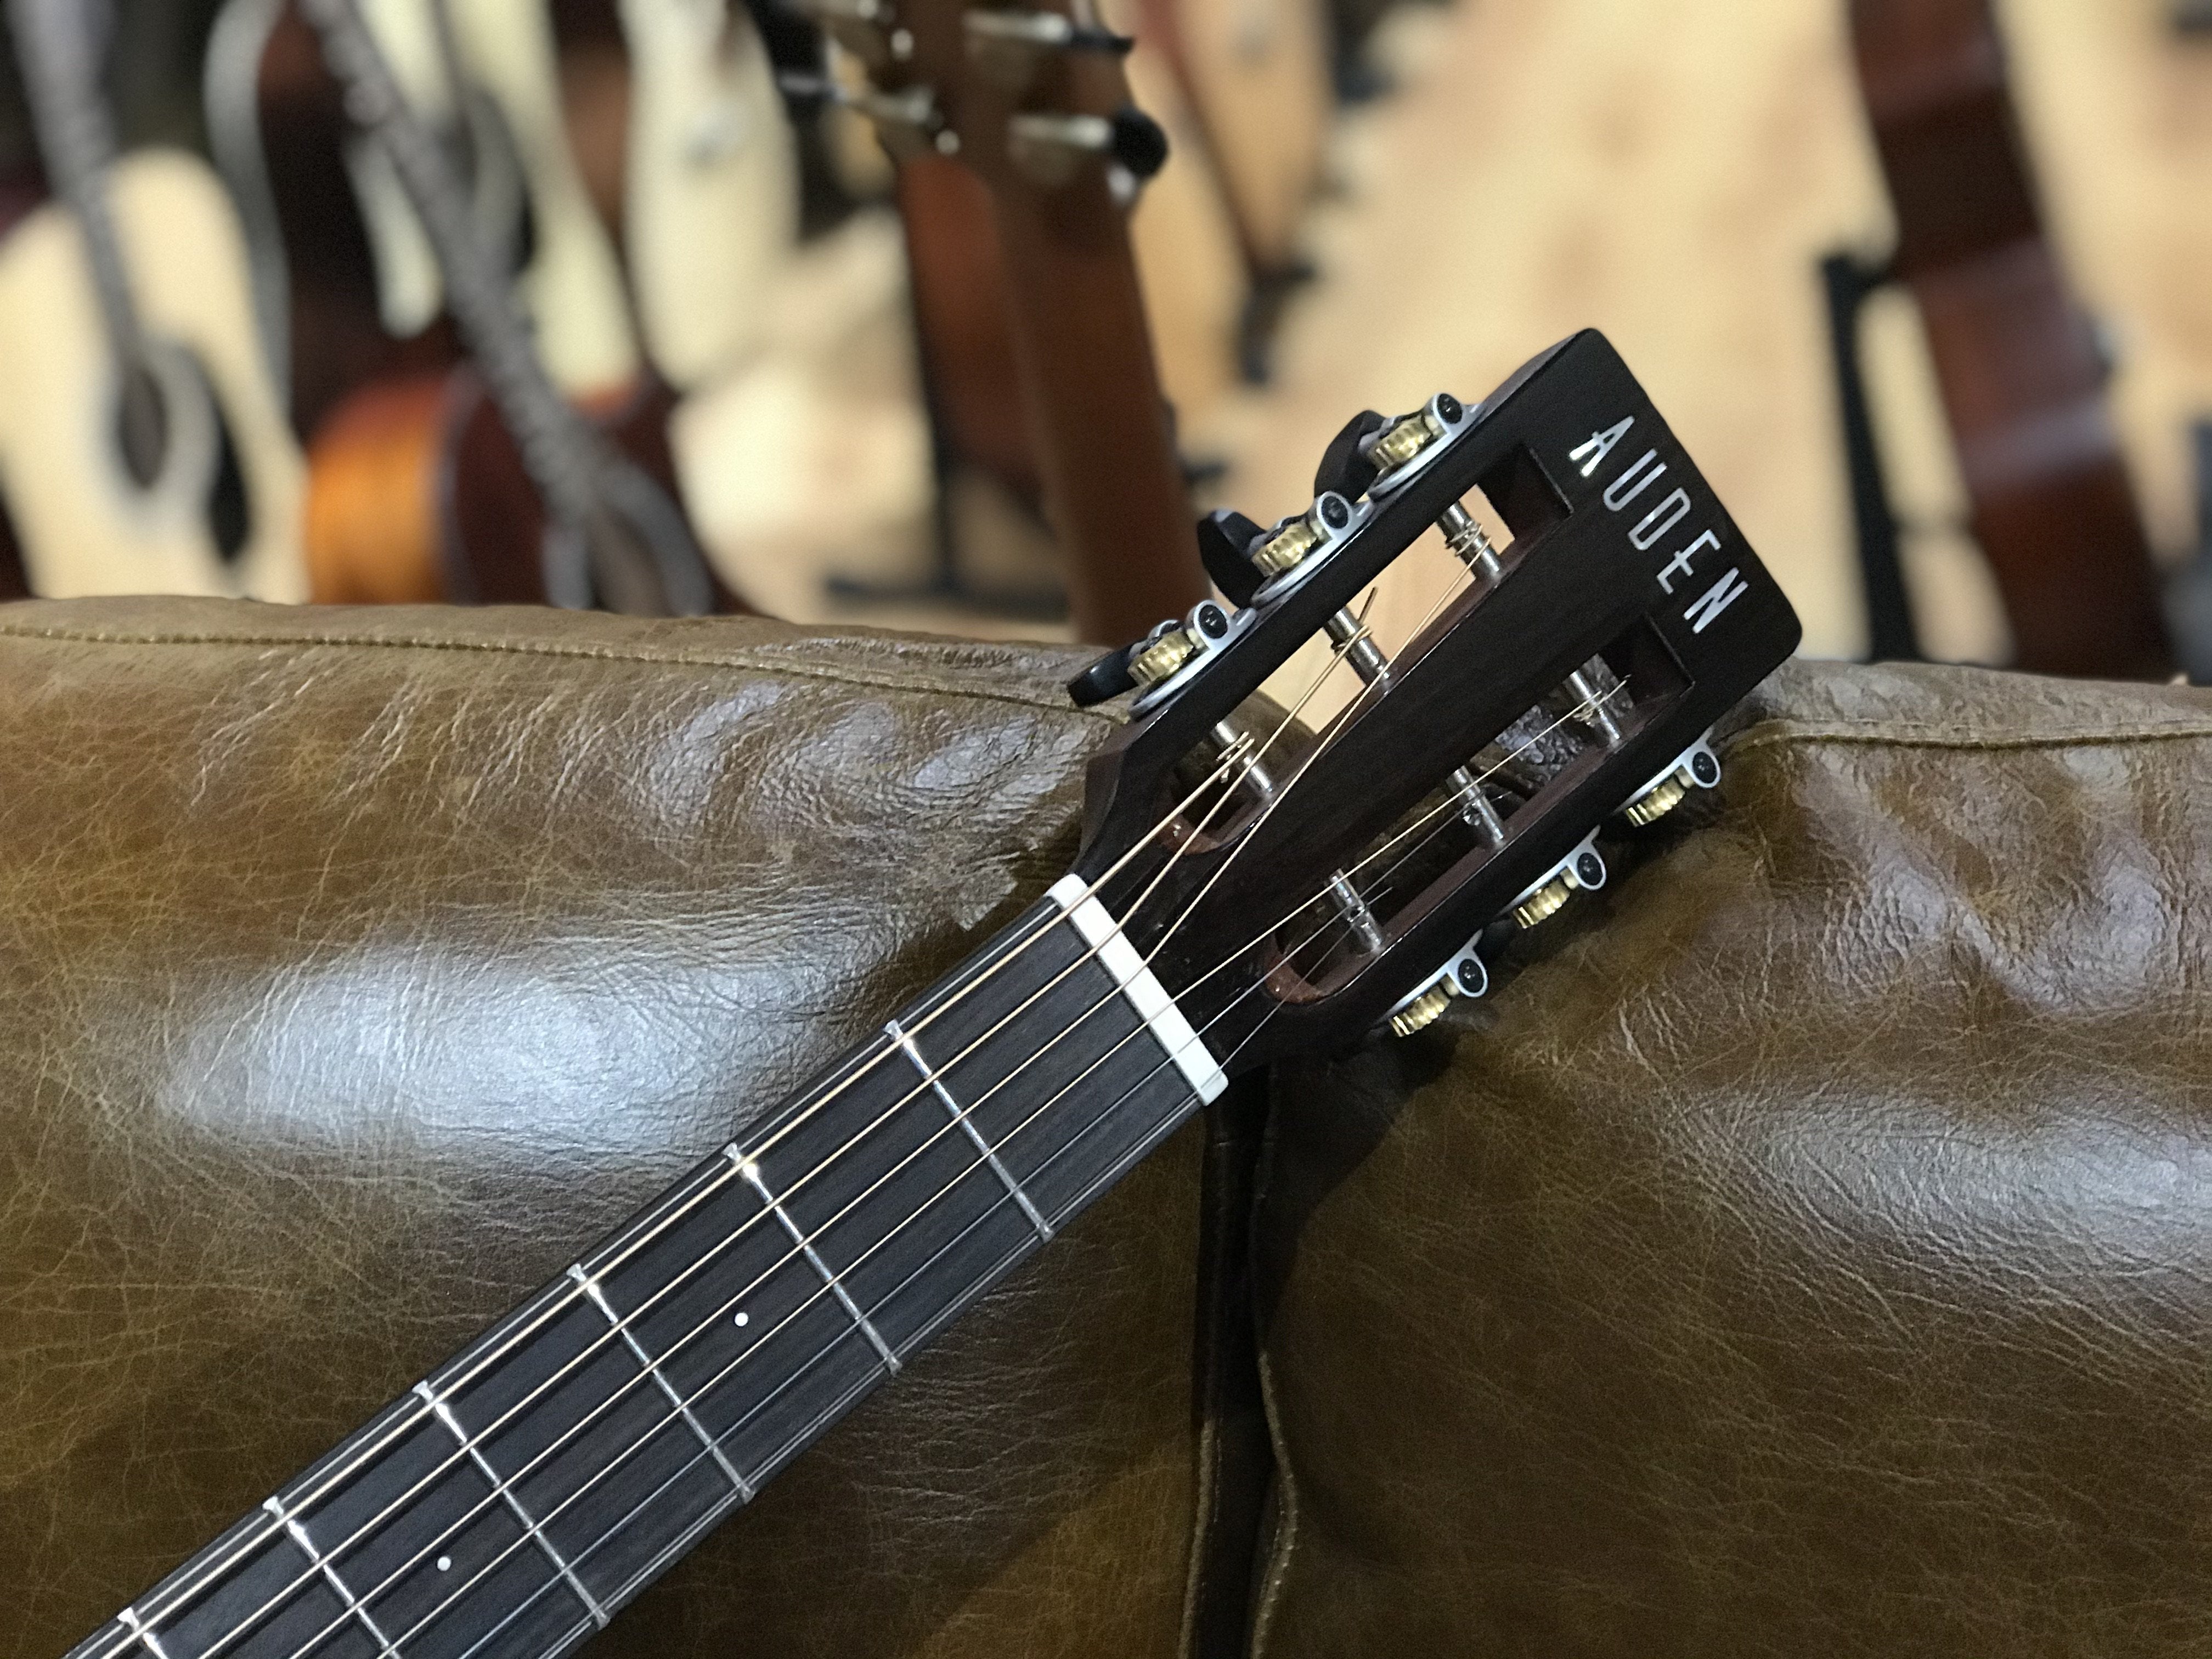 AUDEN MAHOGANY SERIES – EMILY ROSE CEDAR FULL BODY, Electro Acoustic Guitar for sale at Richards Guitars.